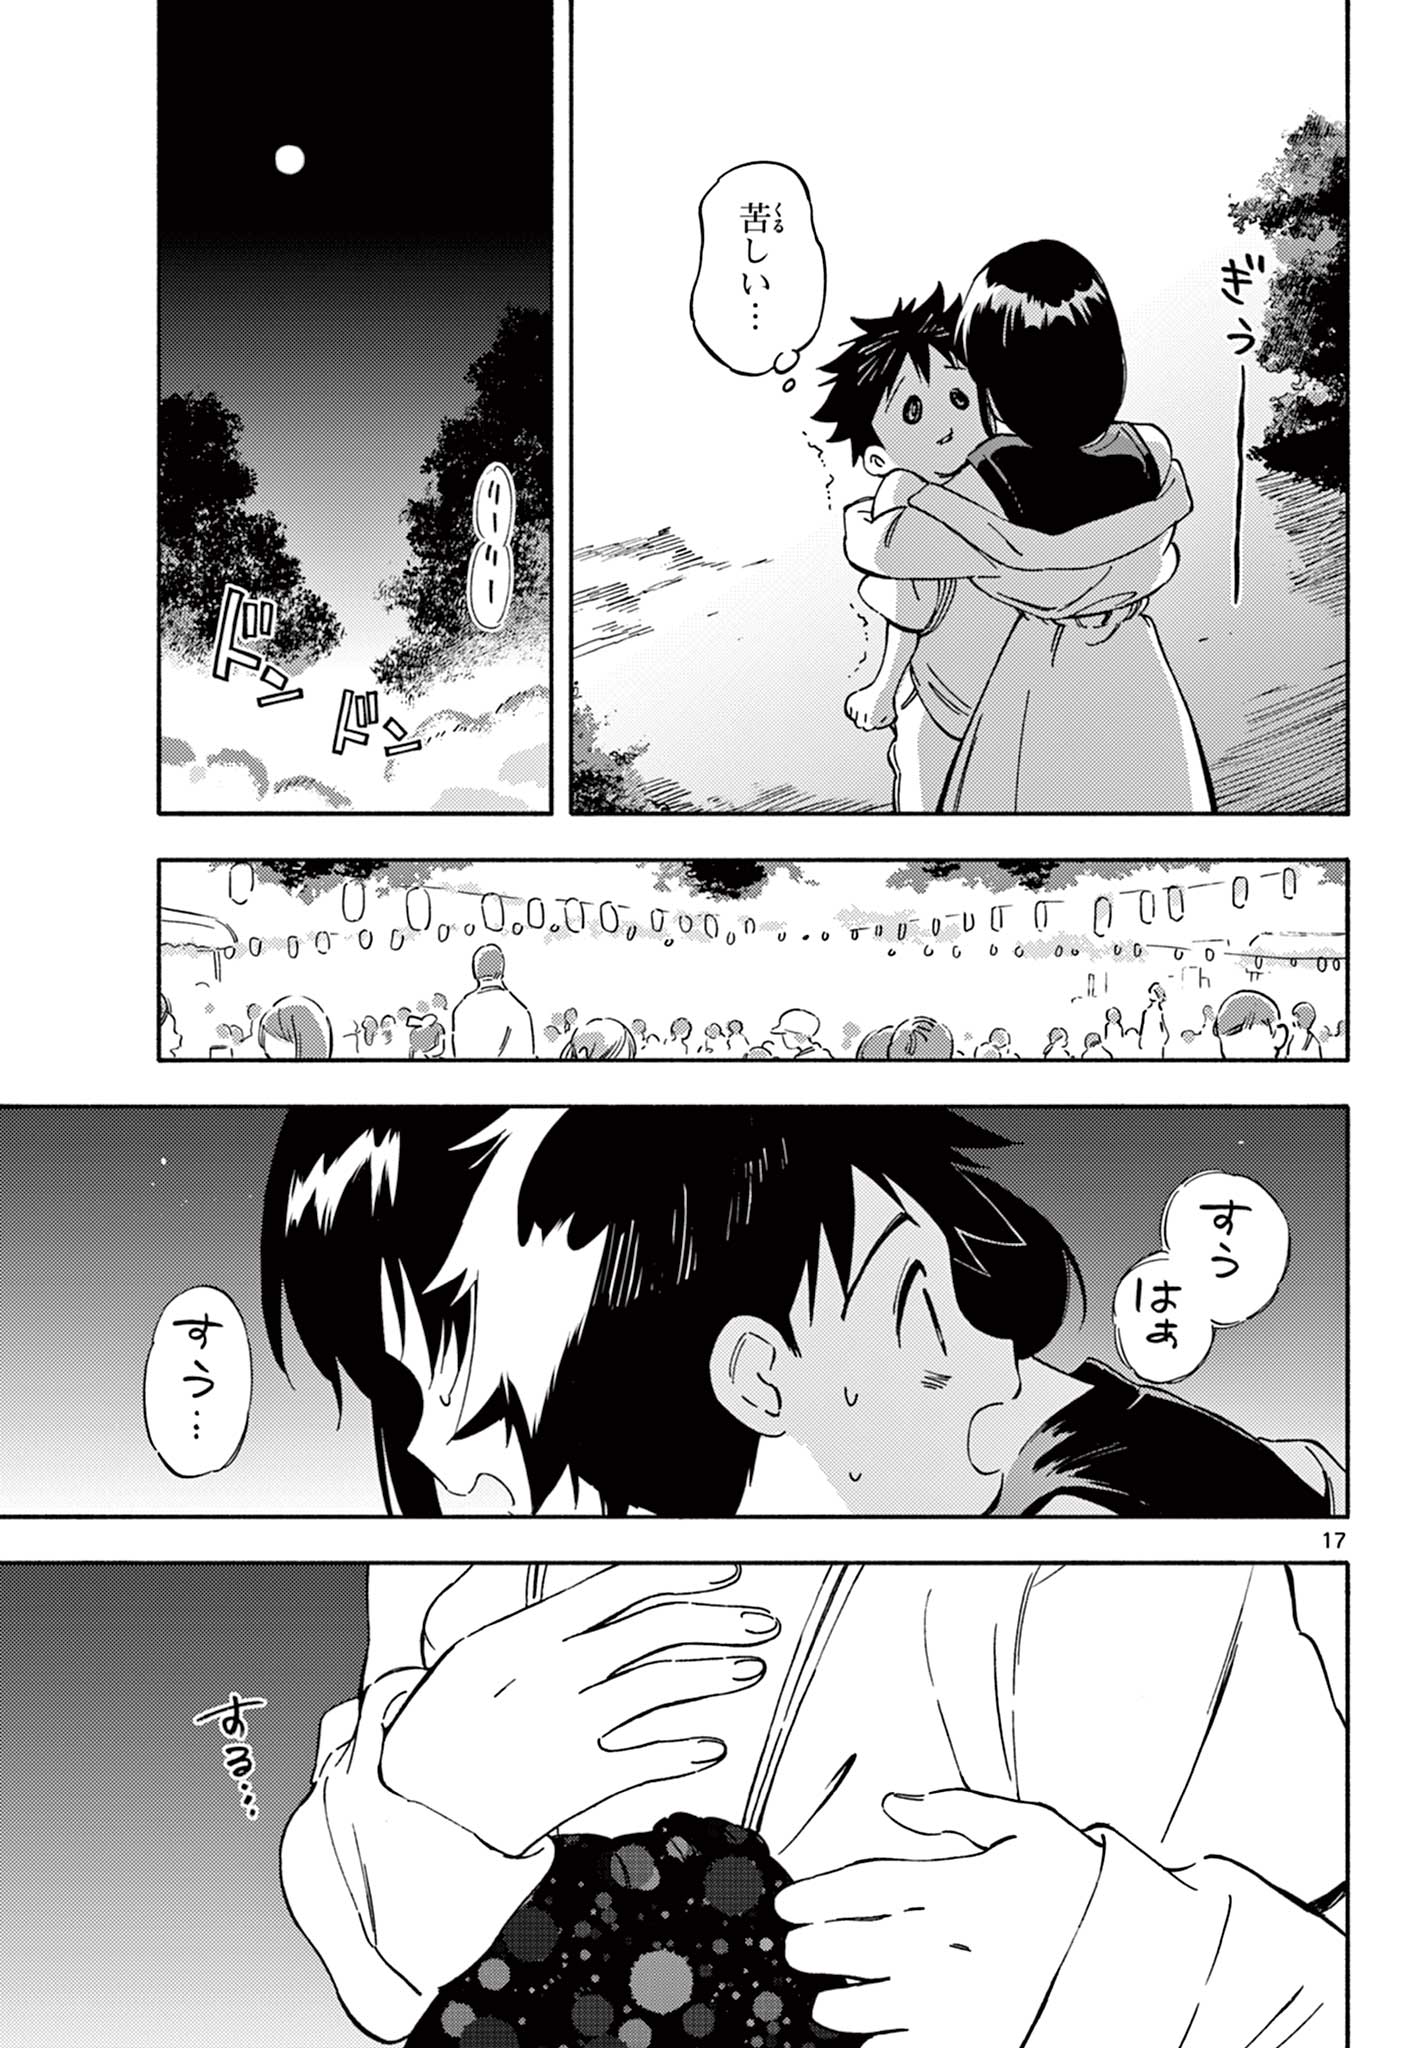 Nami no Shijima no Horizont - Chapter 7.2 - Page 2